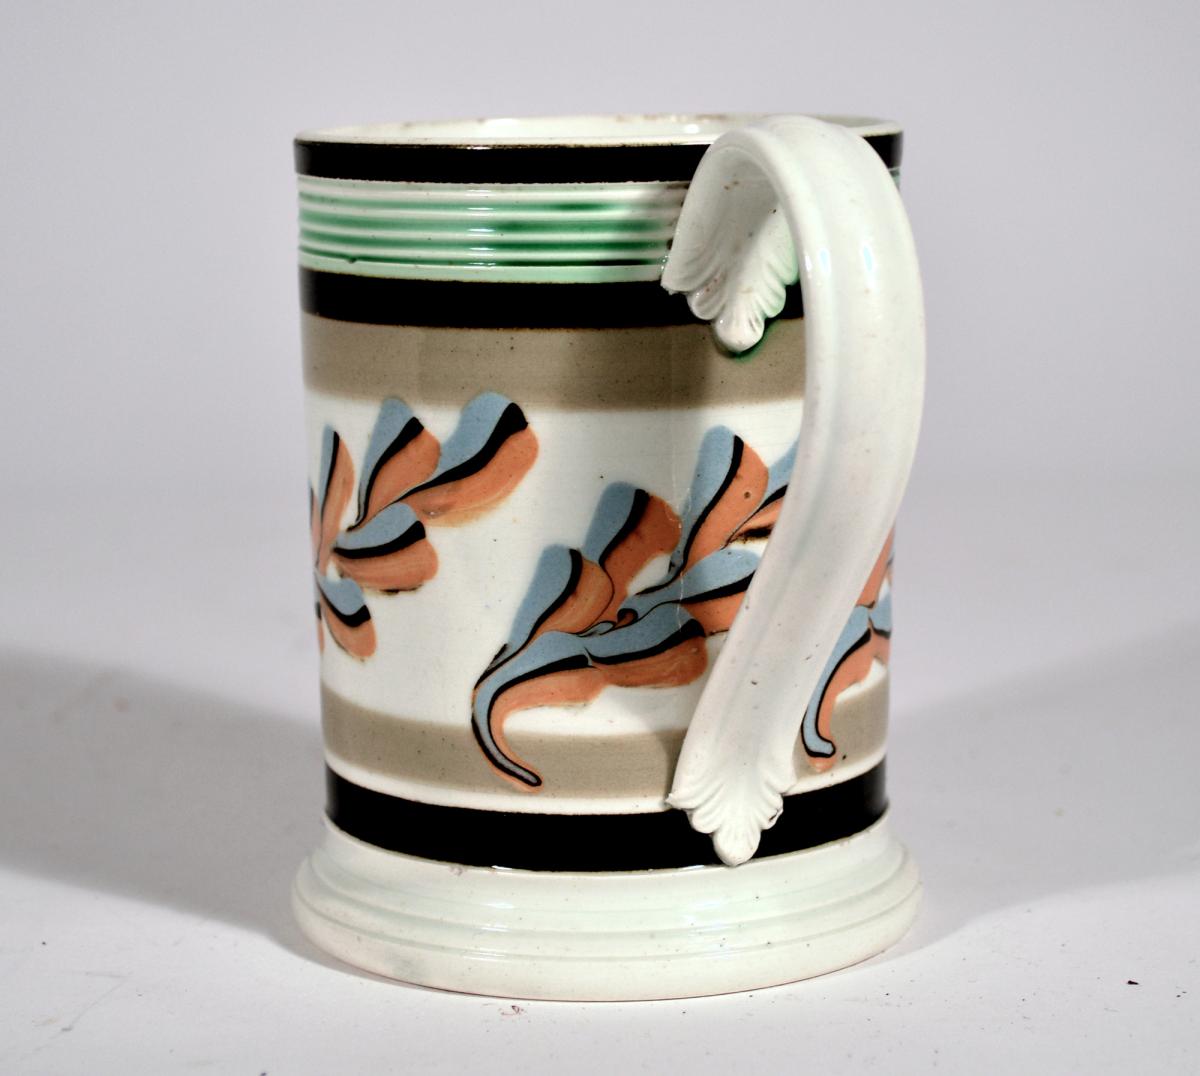 English Pottery Creamware Mocha Mug